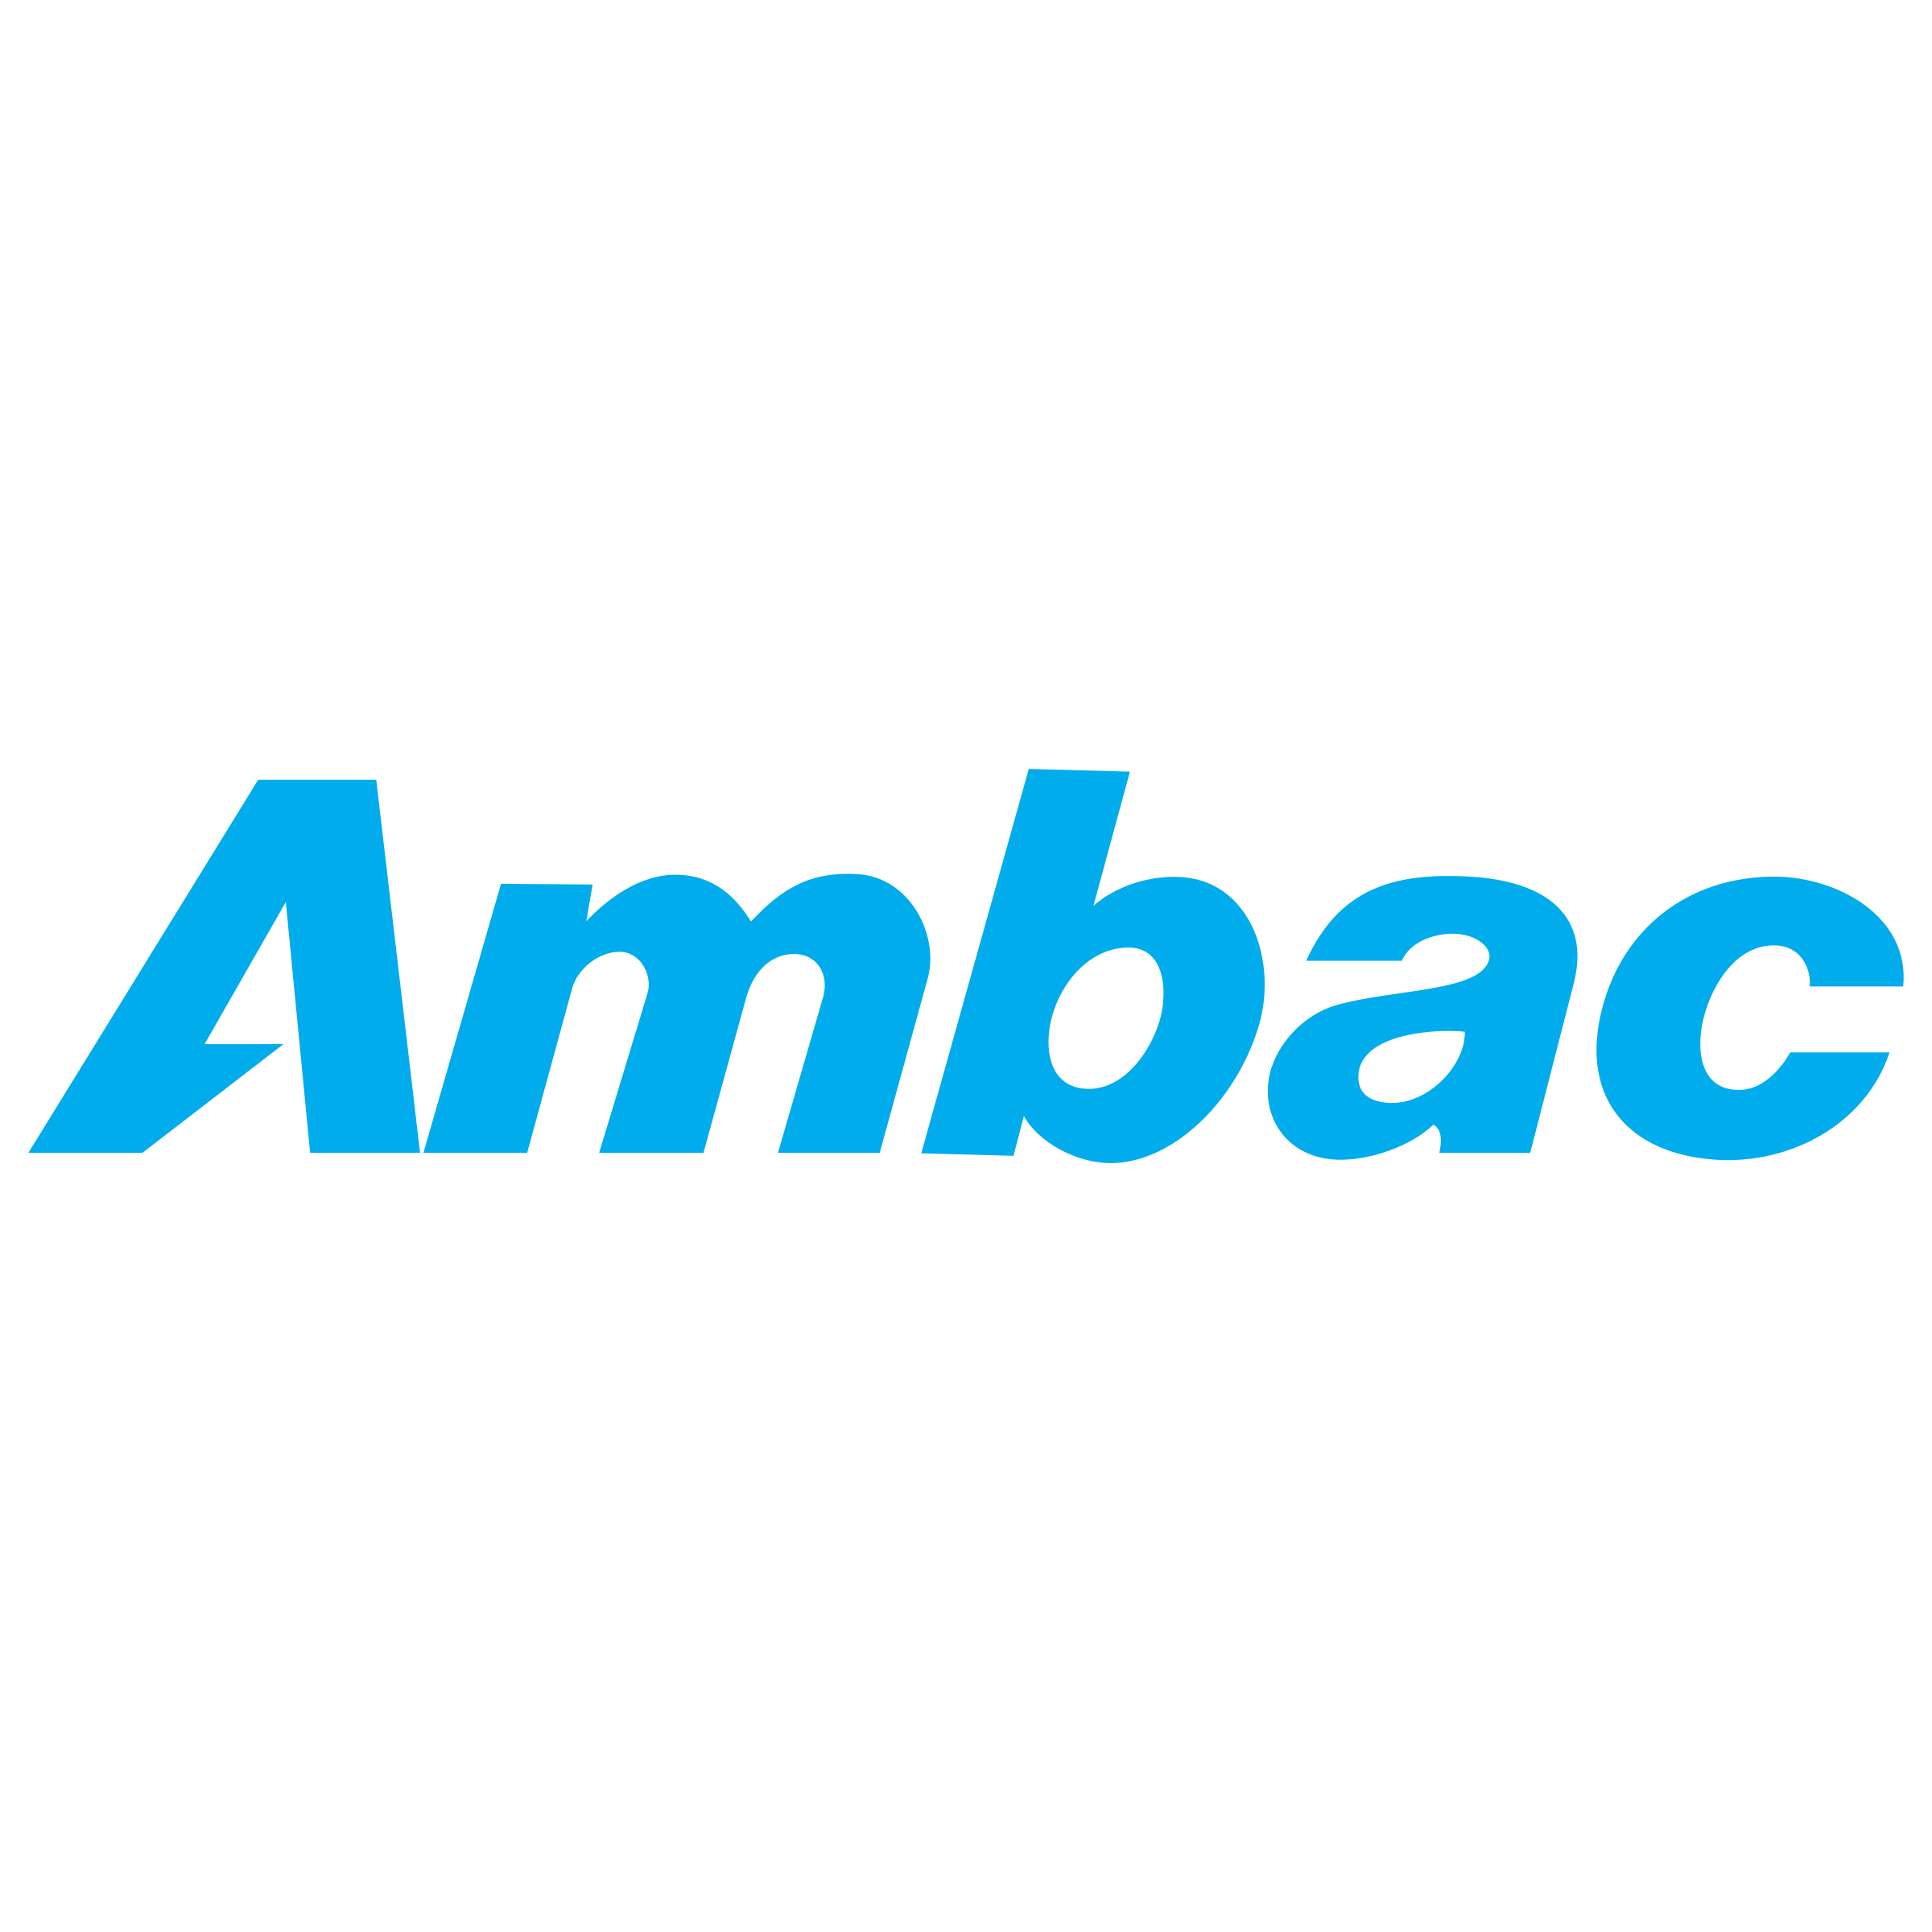 Ambac Financial Group, Inc.